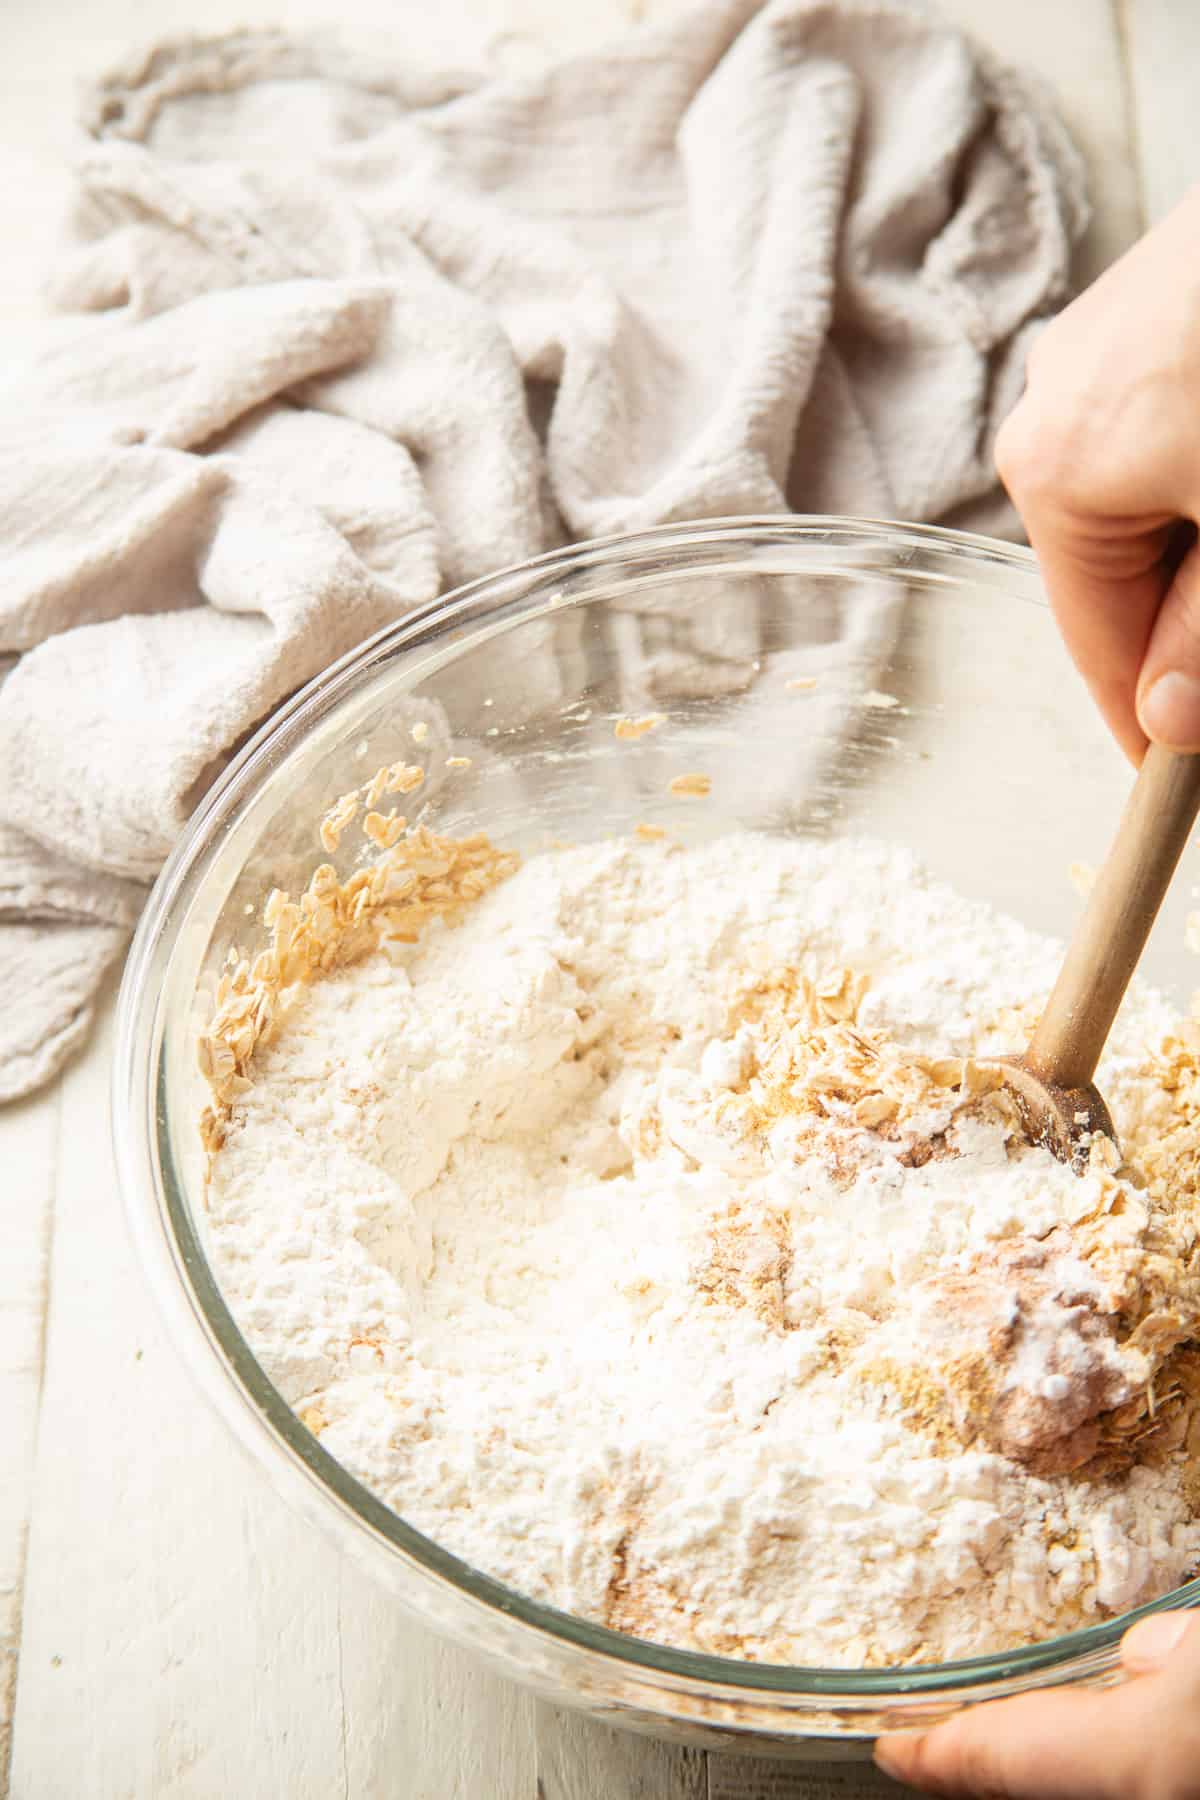 Hands stirring flour into a bowl of cookie dough.